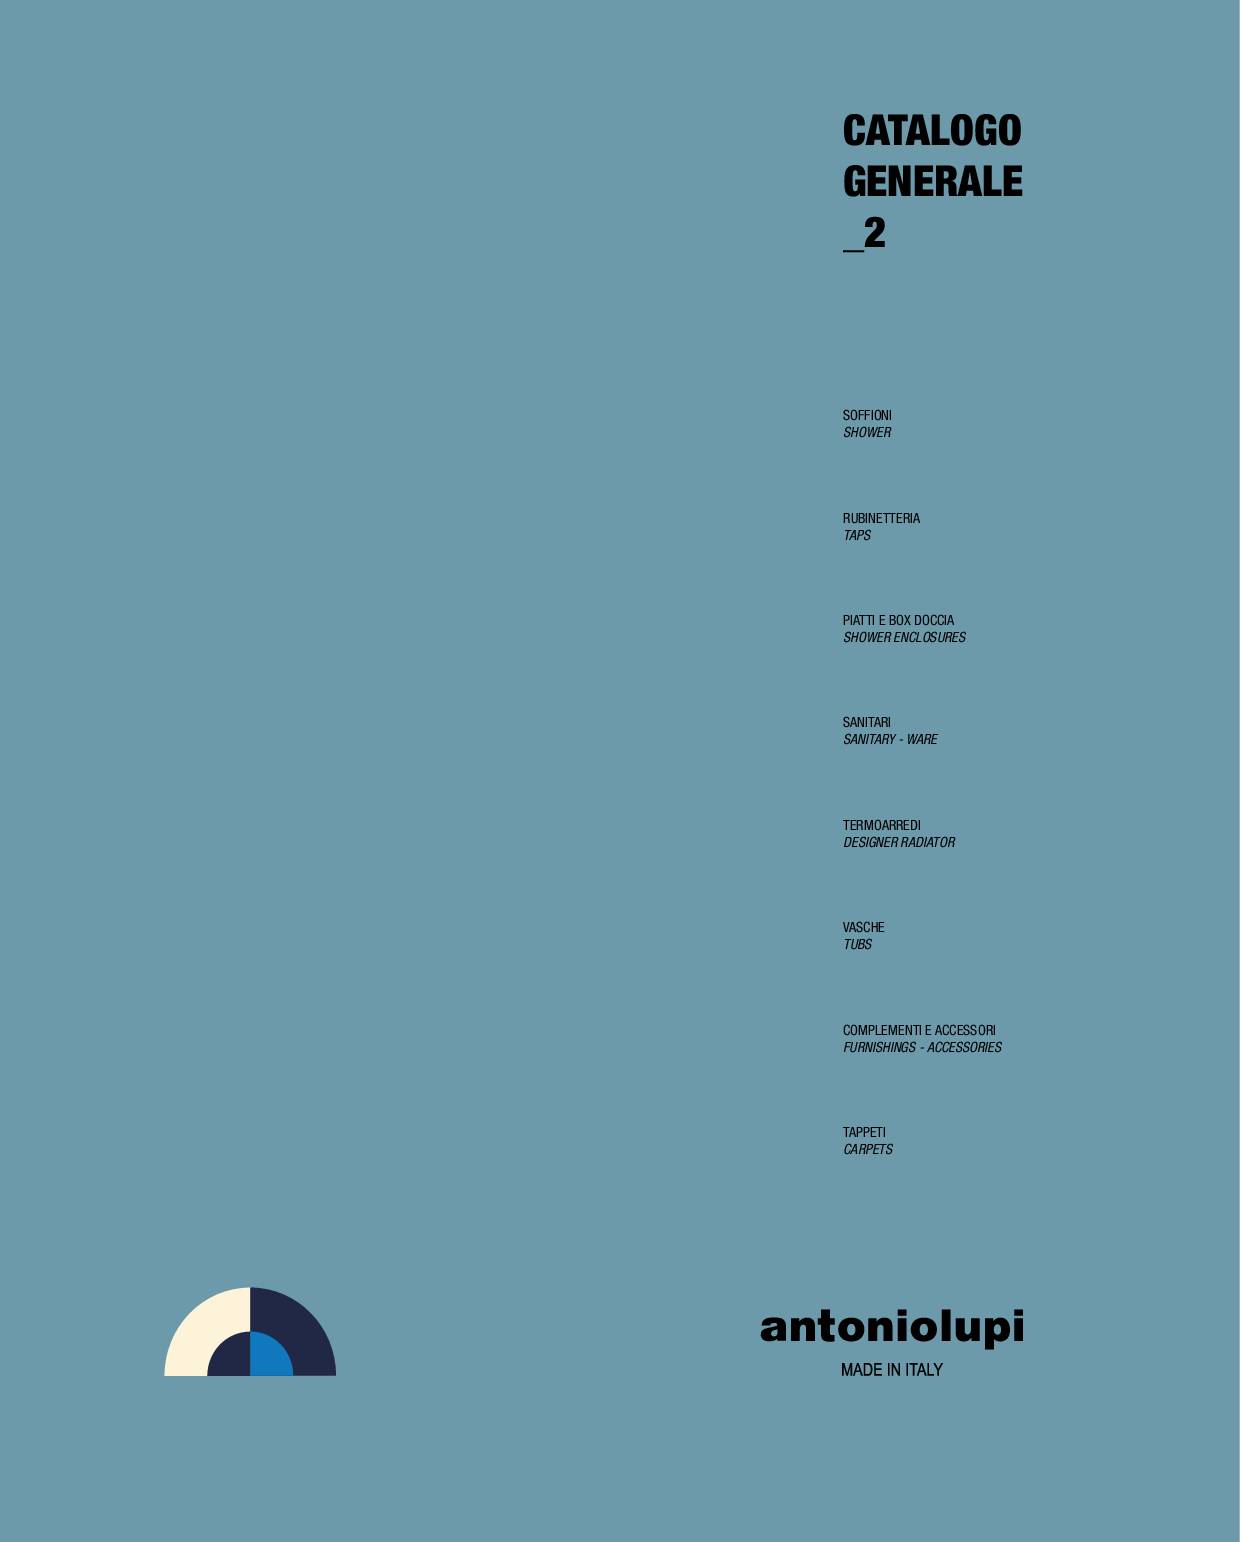 Antonio Lupi - Catalogue général Douches